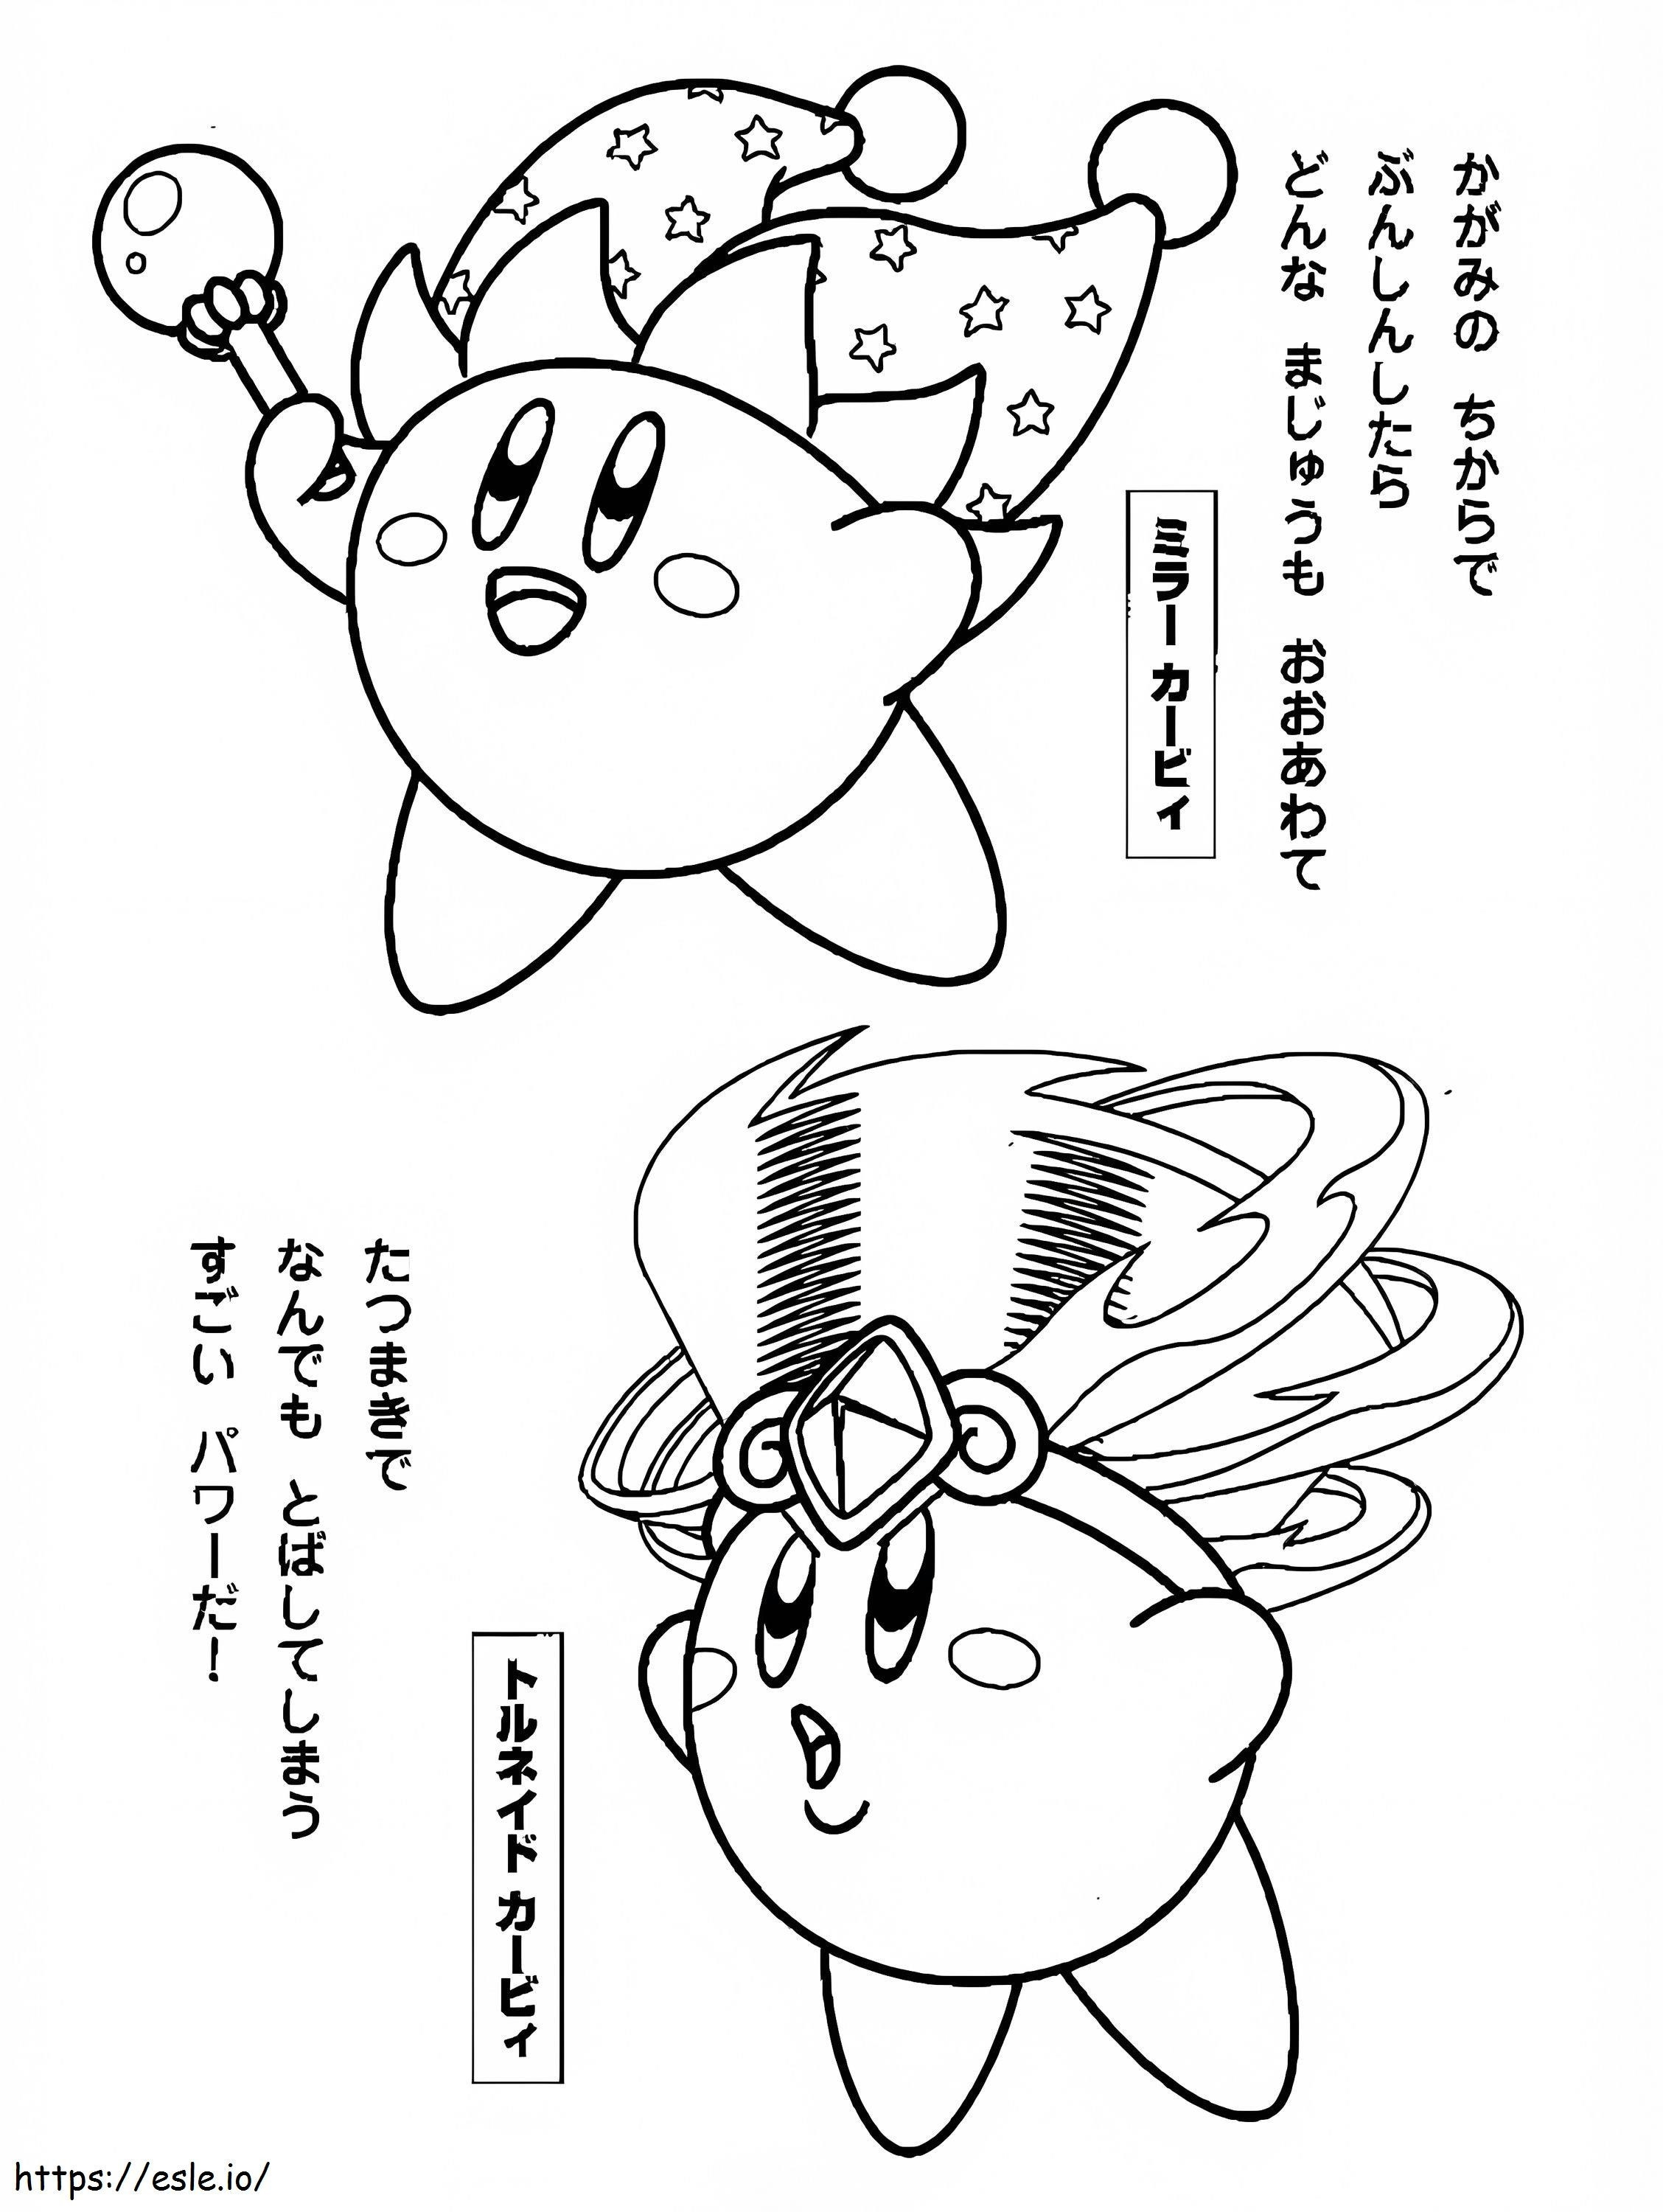 Kirby Fun de colorat